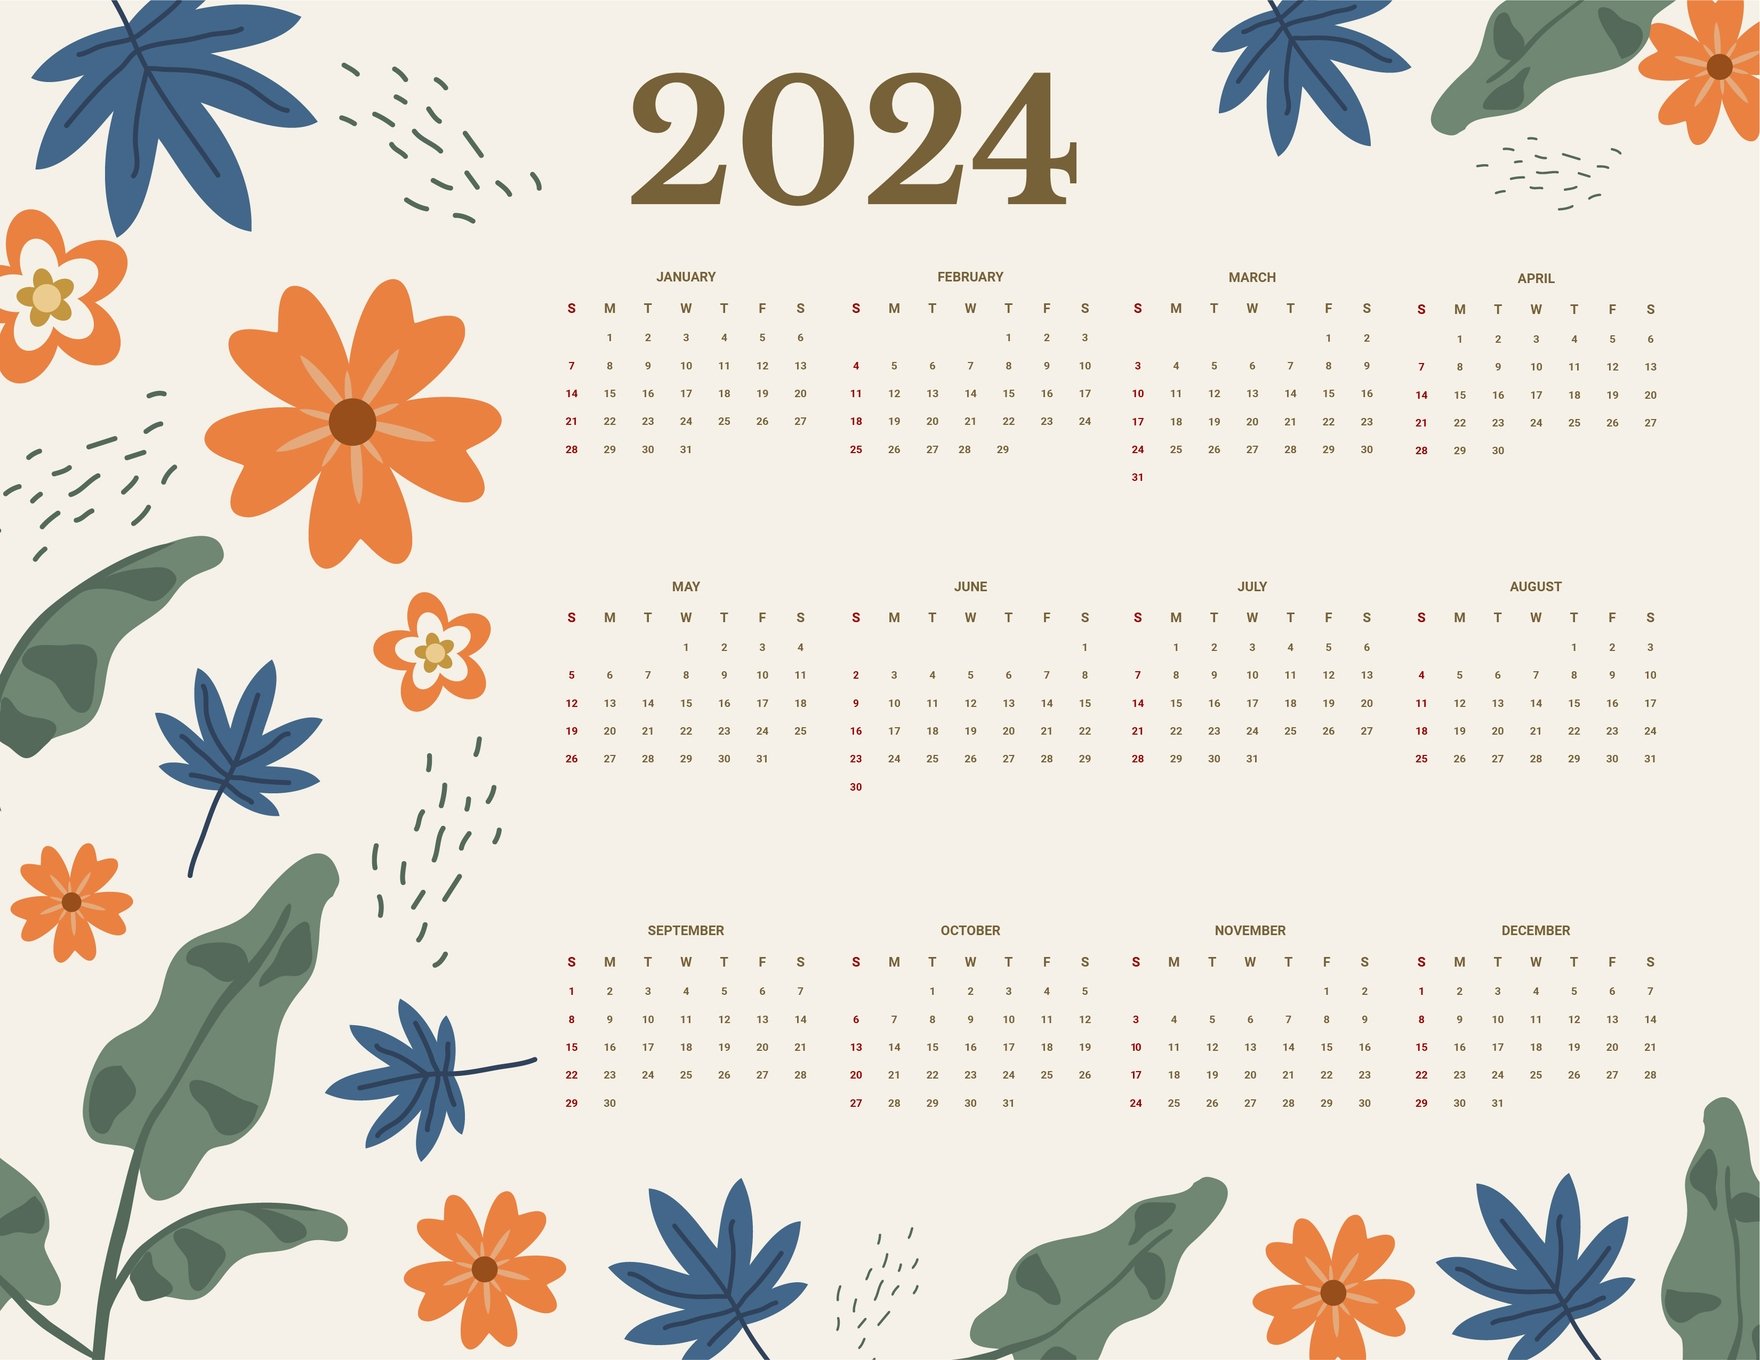 Floral Year 2024 Calendar